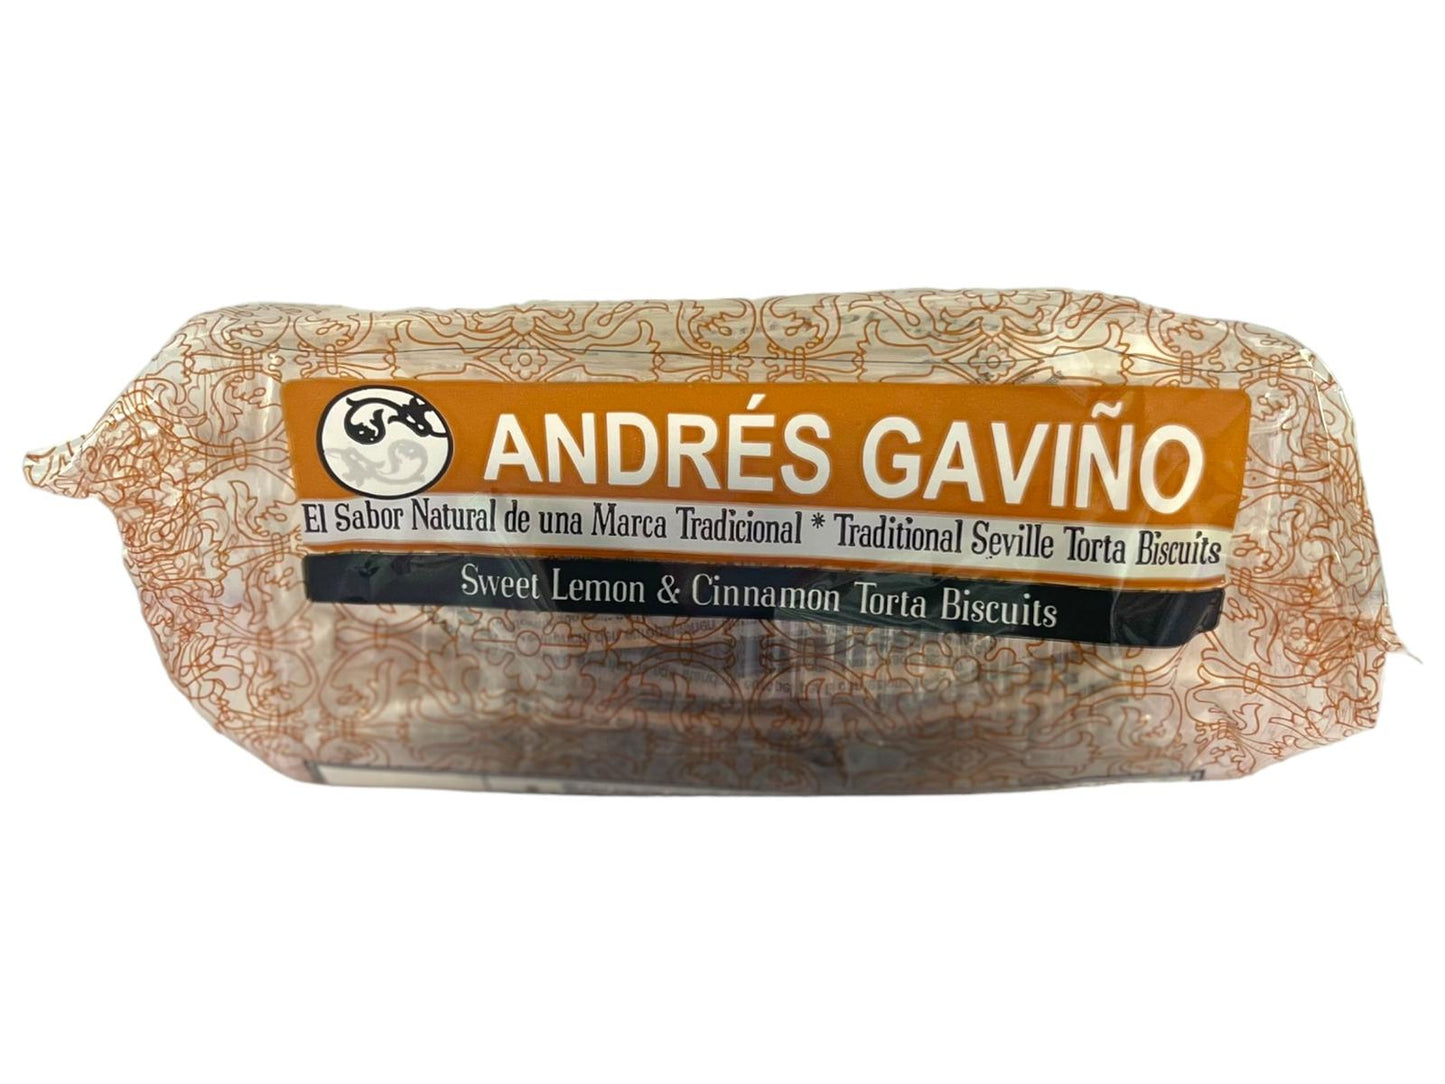 Andres Gavino Spanish Lemon And Cinnamon Tortas 180g Twin Pack 360g Total